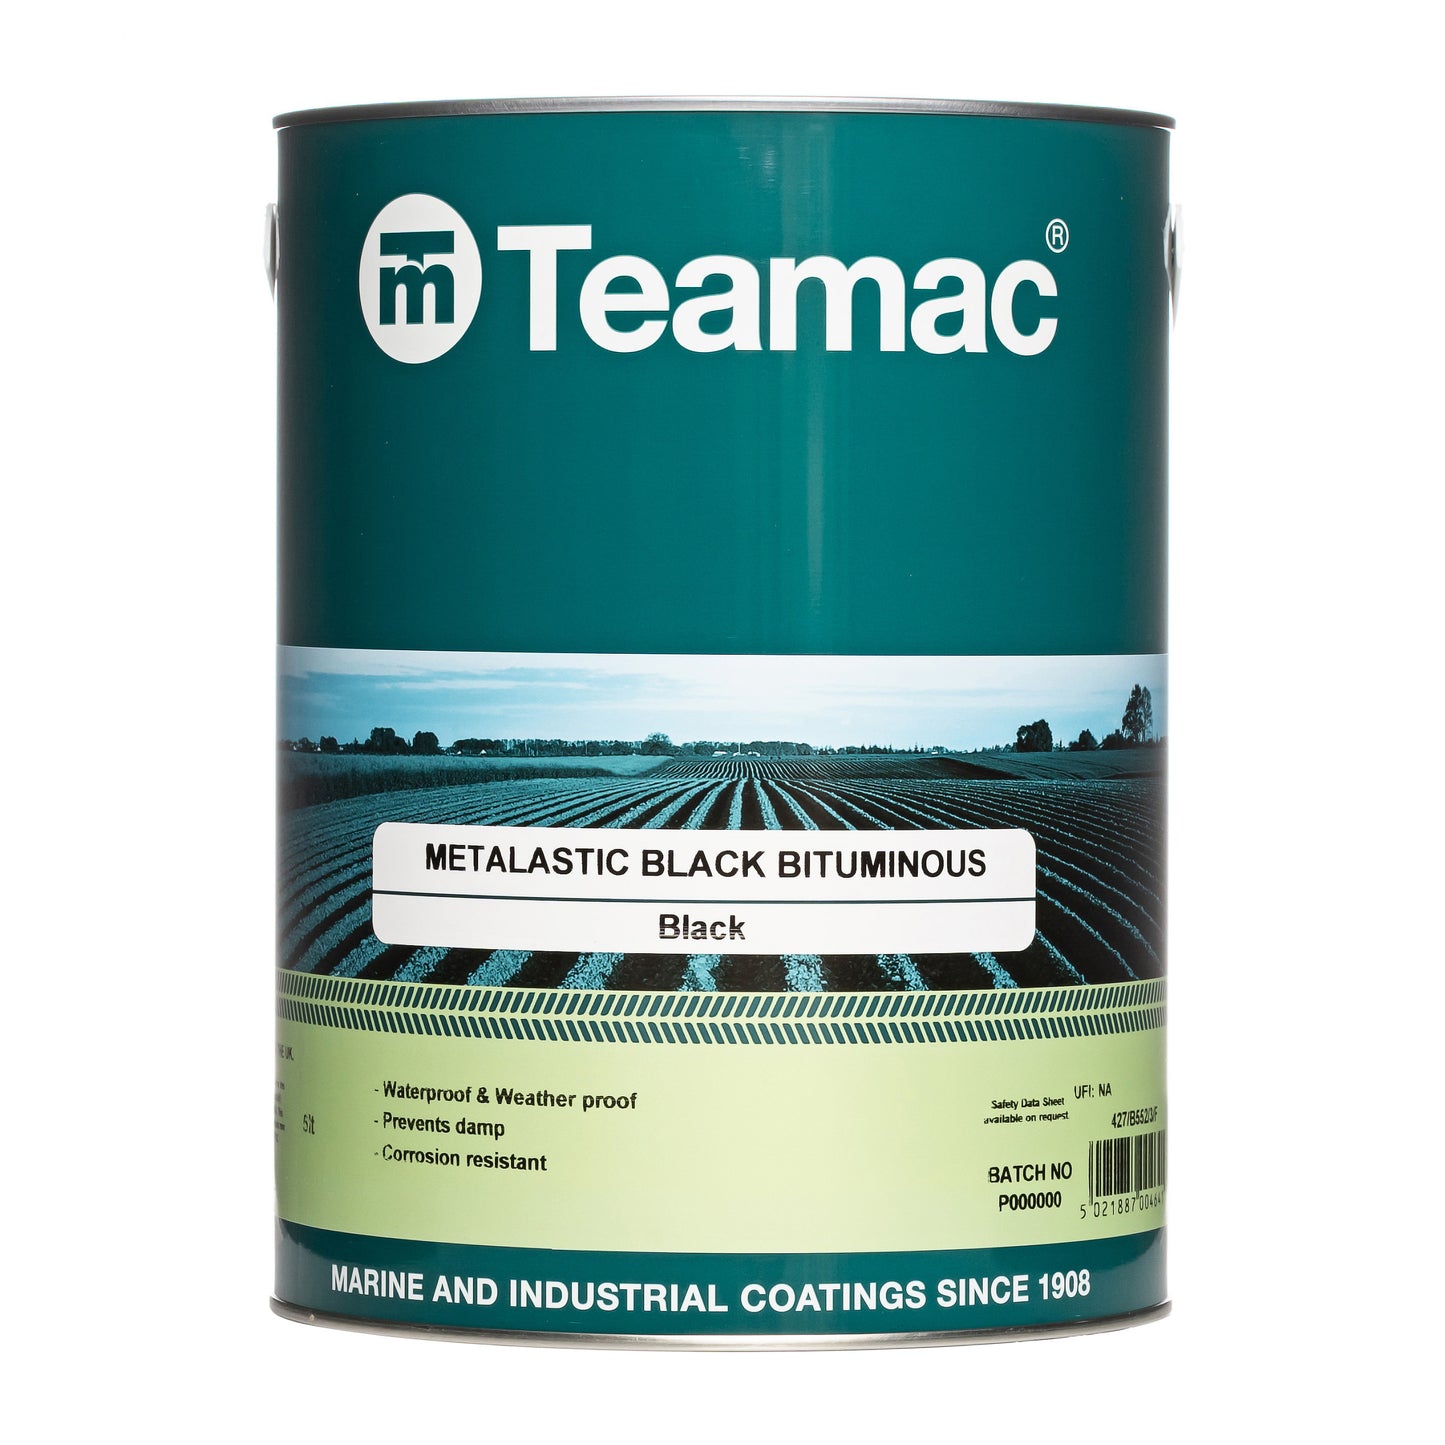 Teamac Metalastic Black Bituminous 5L